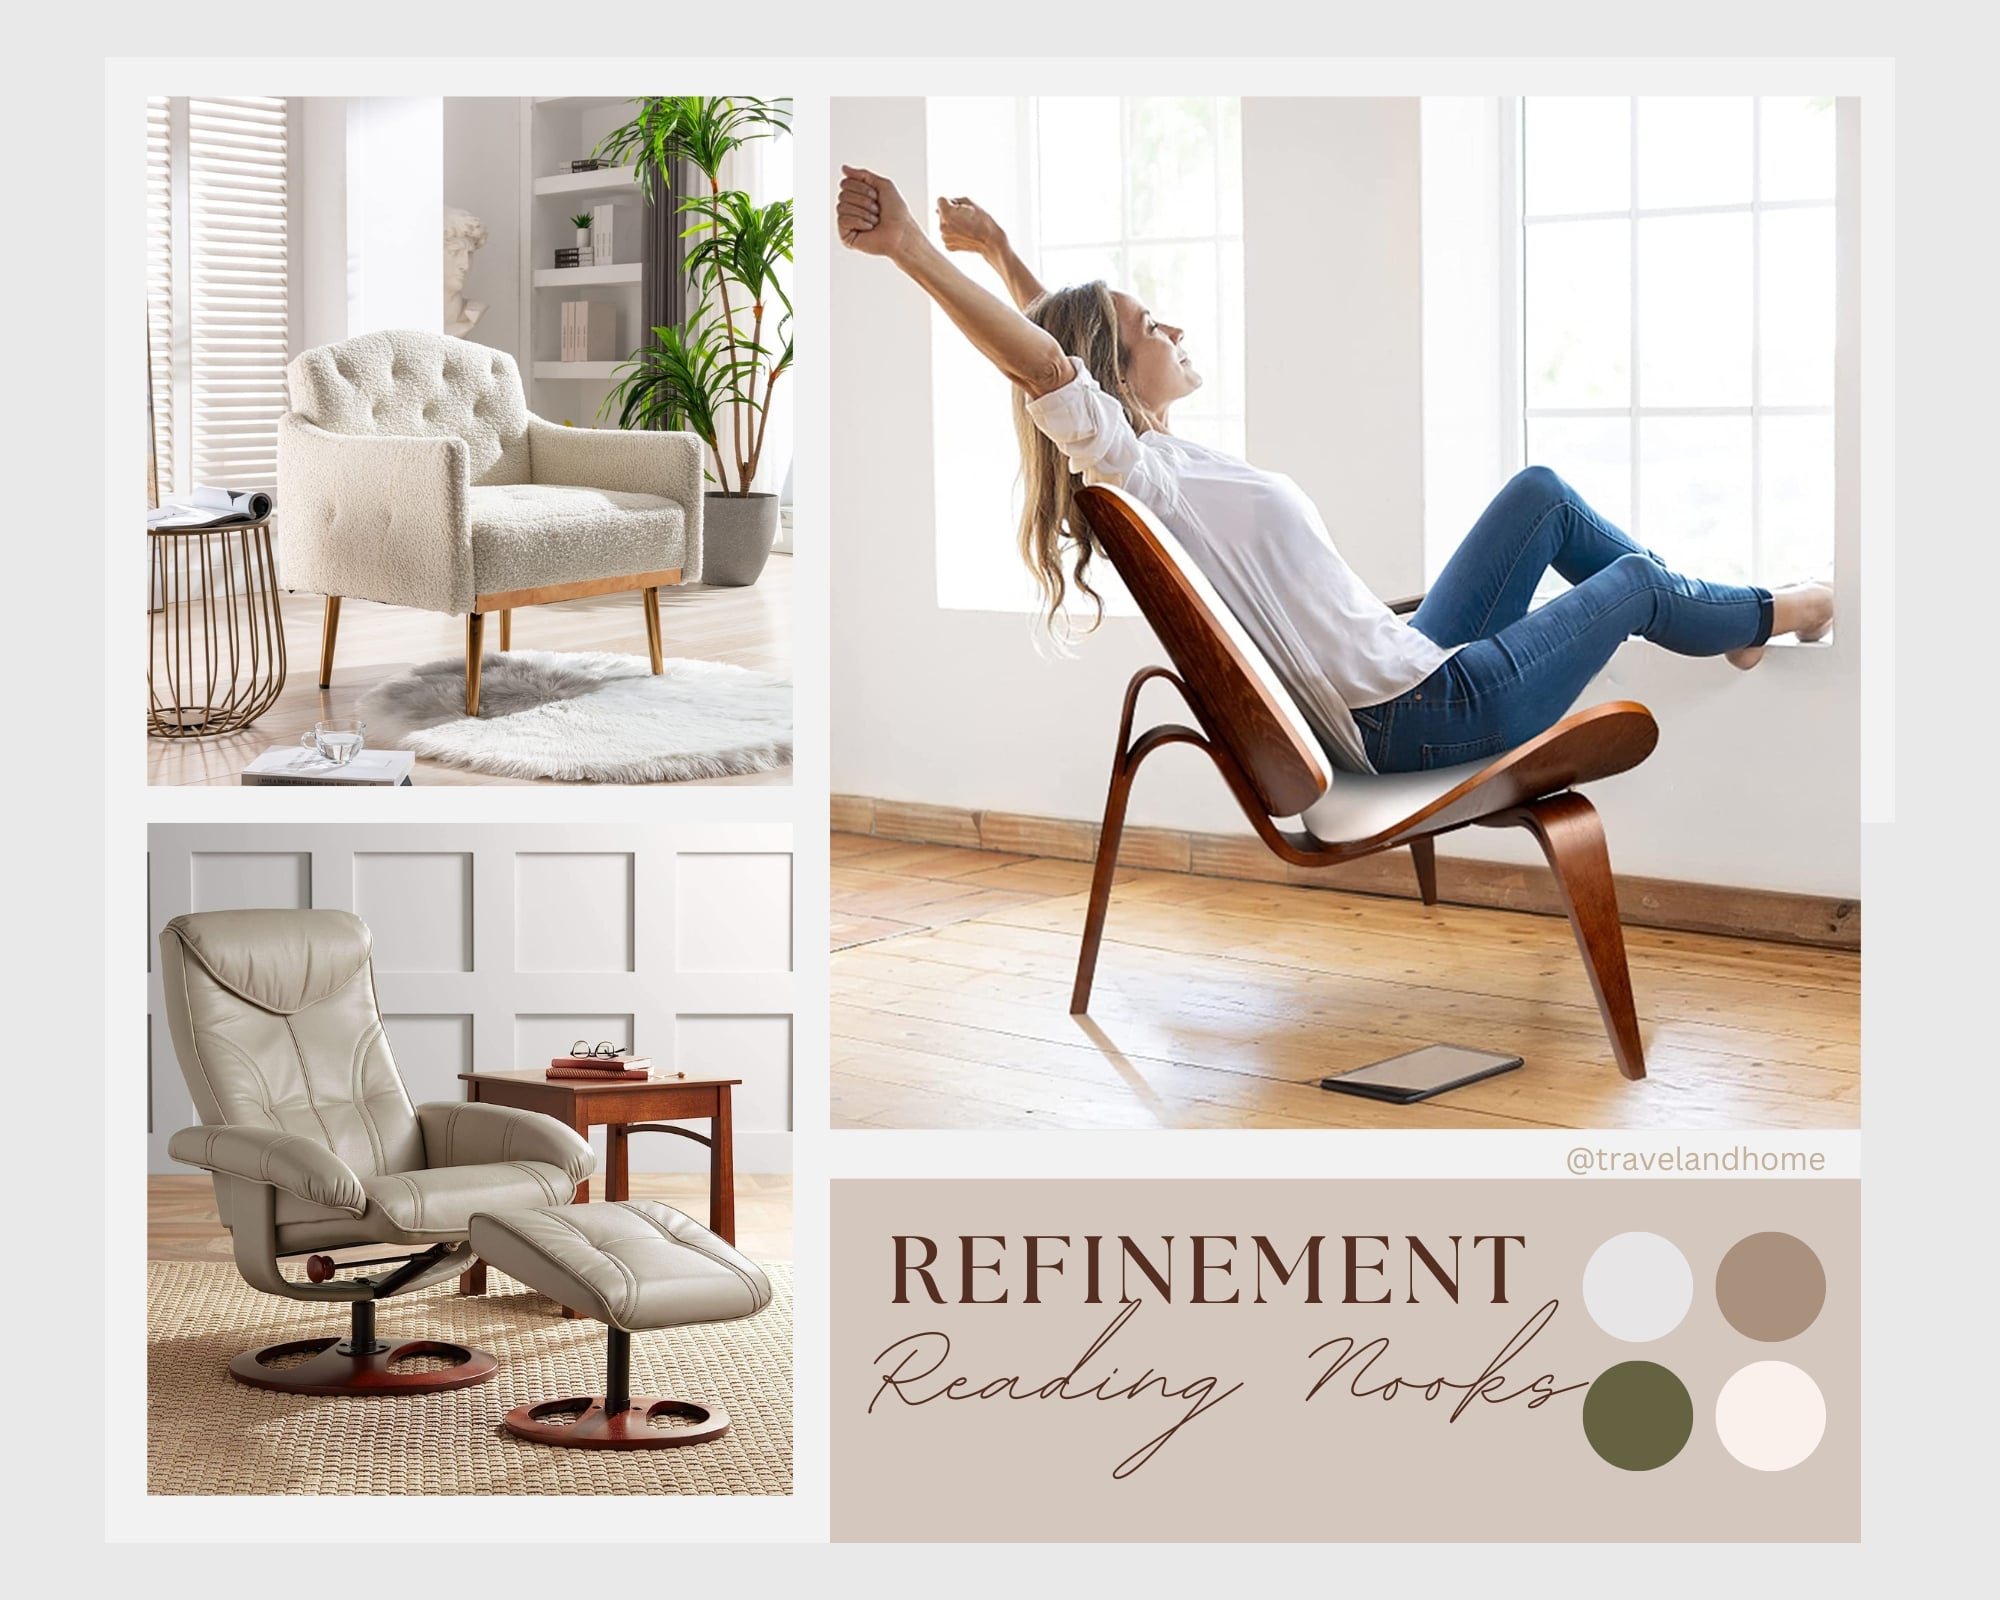 Cozy reading nooks, Scandinavian style, simplicity minimalist interior decor, interior design tips min